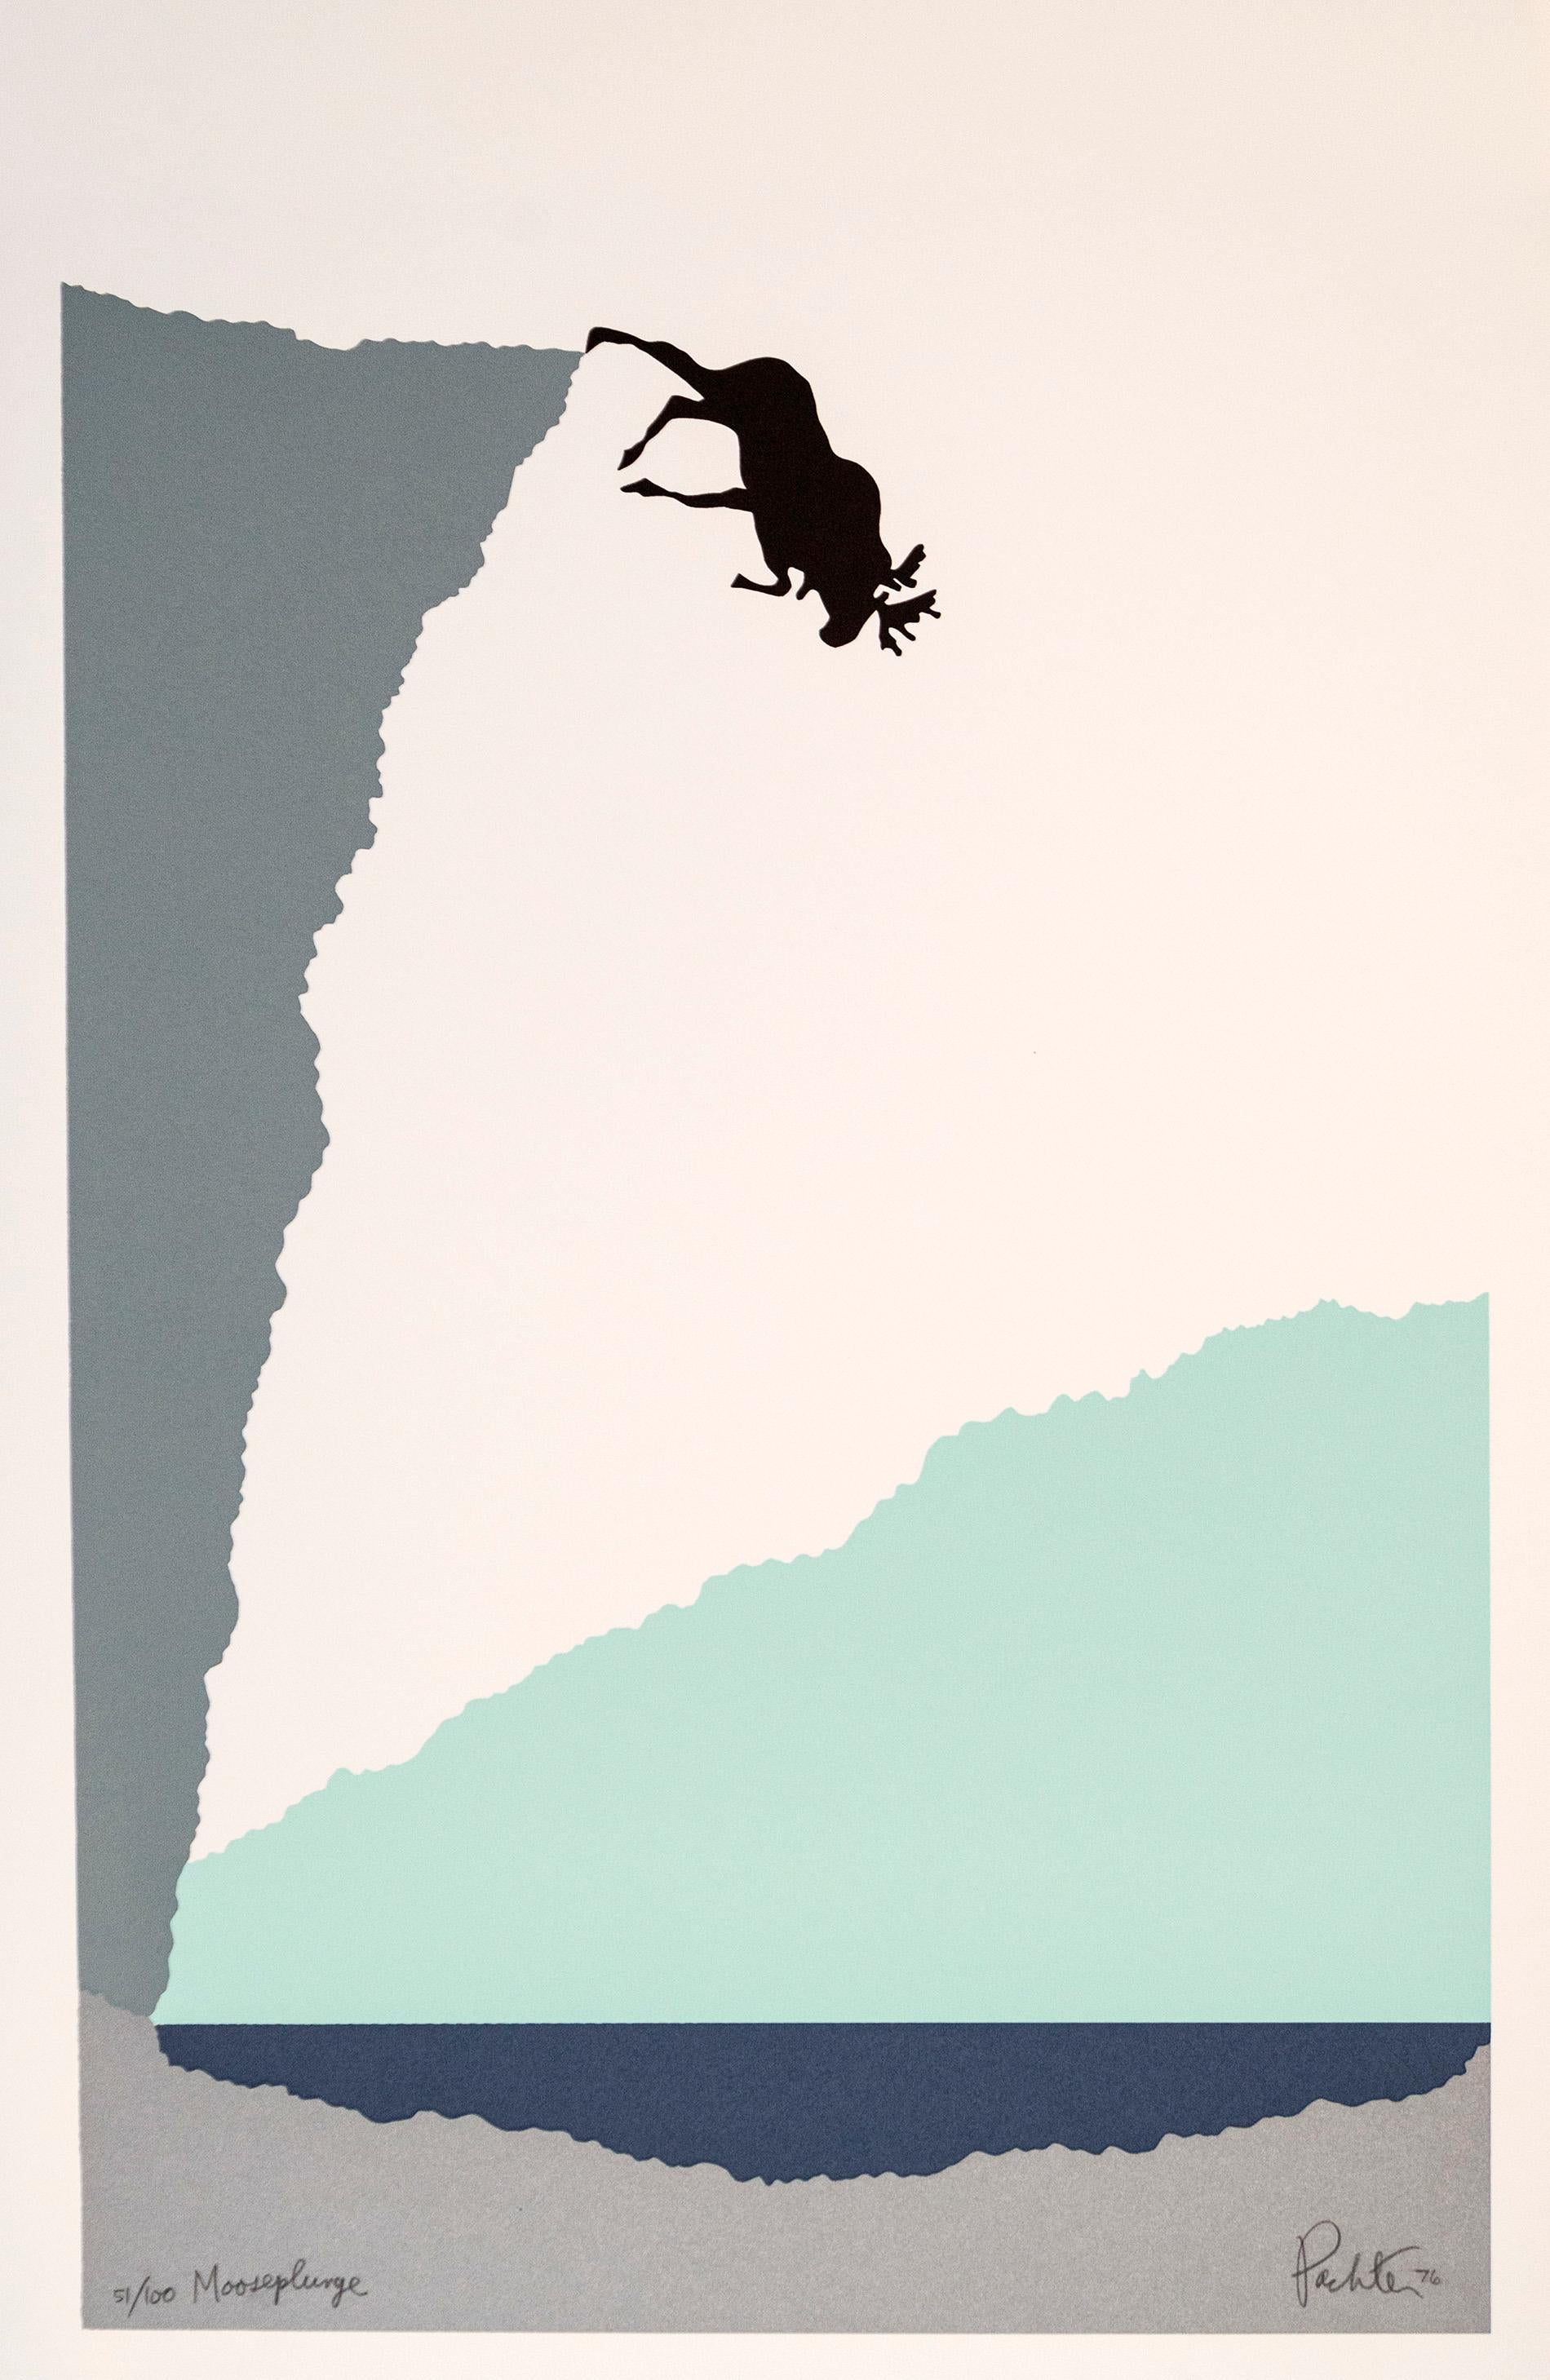 Charles Pachter Figurative Art - Mooseplunge, 1976 51/100 - figurative, playful, pop-art, serigraph limited print